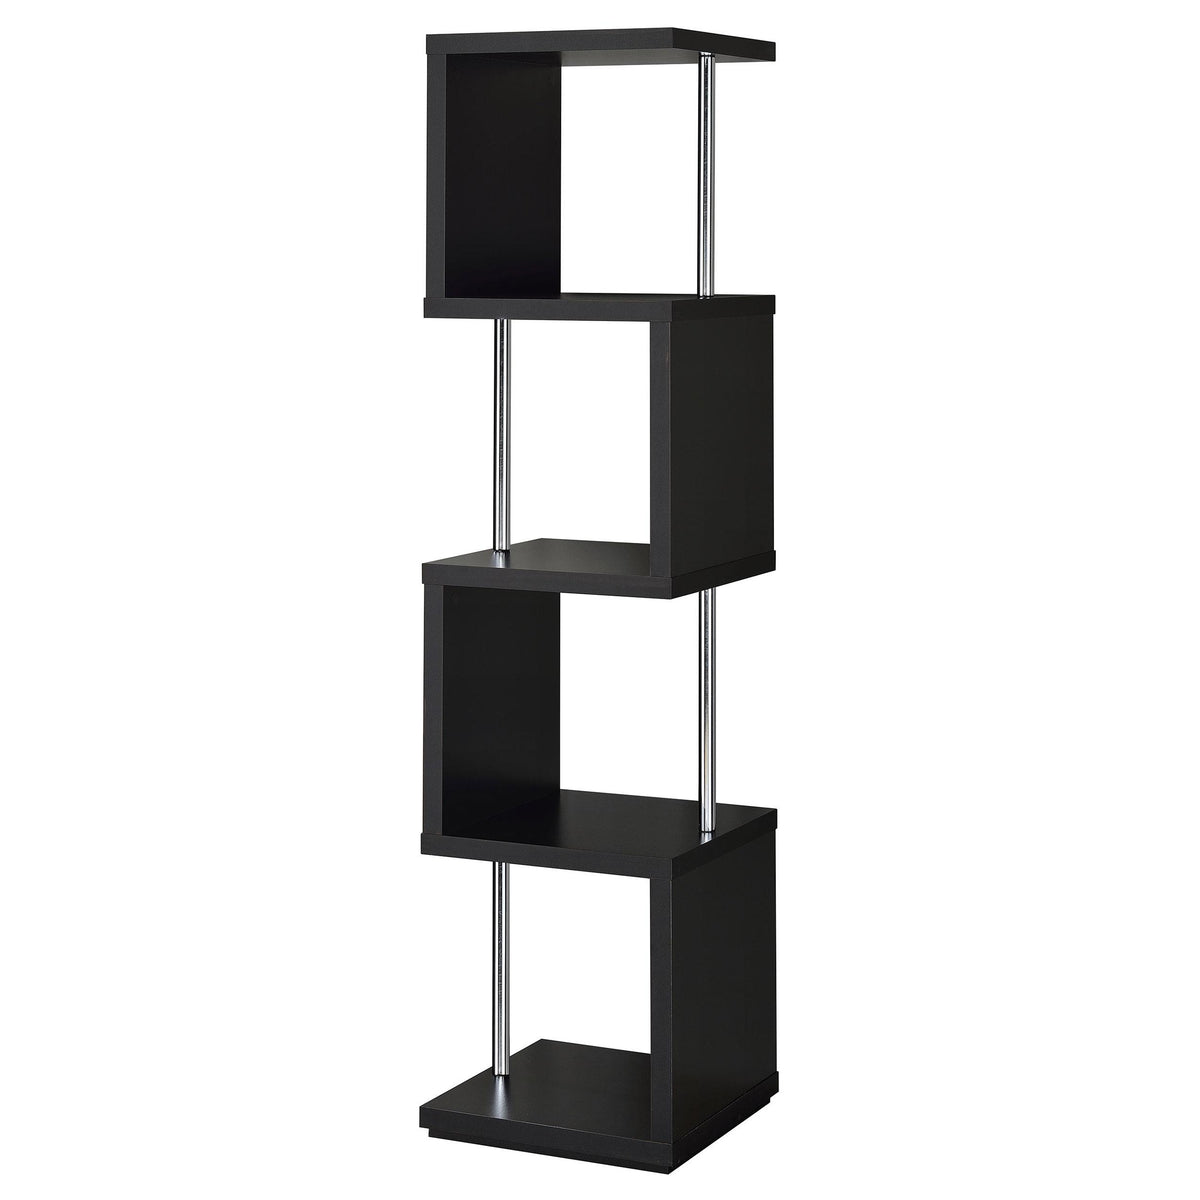 Baxter 4-shelf Bookcase Black and Chrome  Las Vegas Furniture Stores